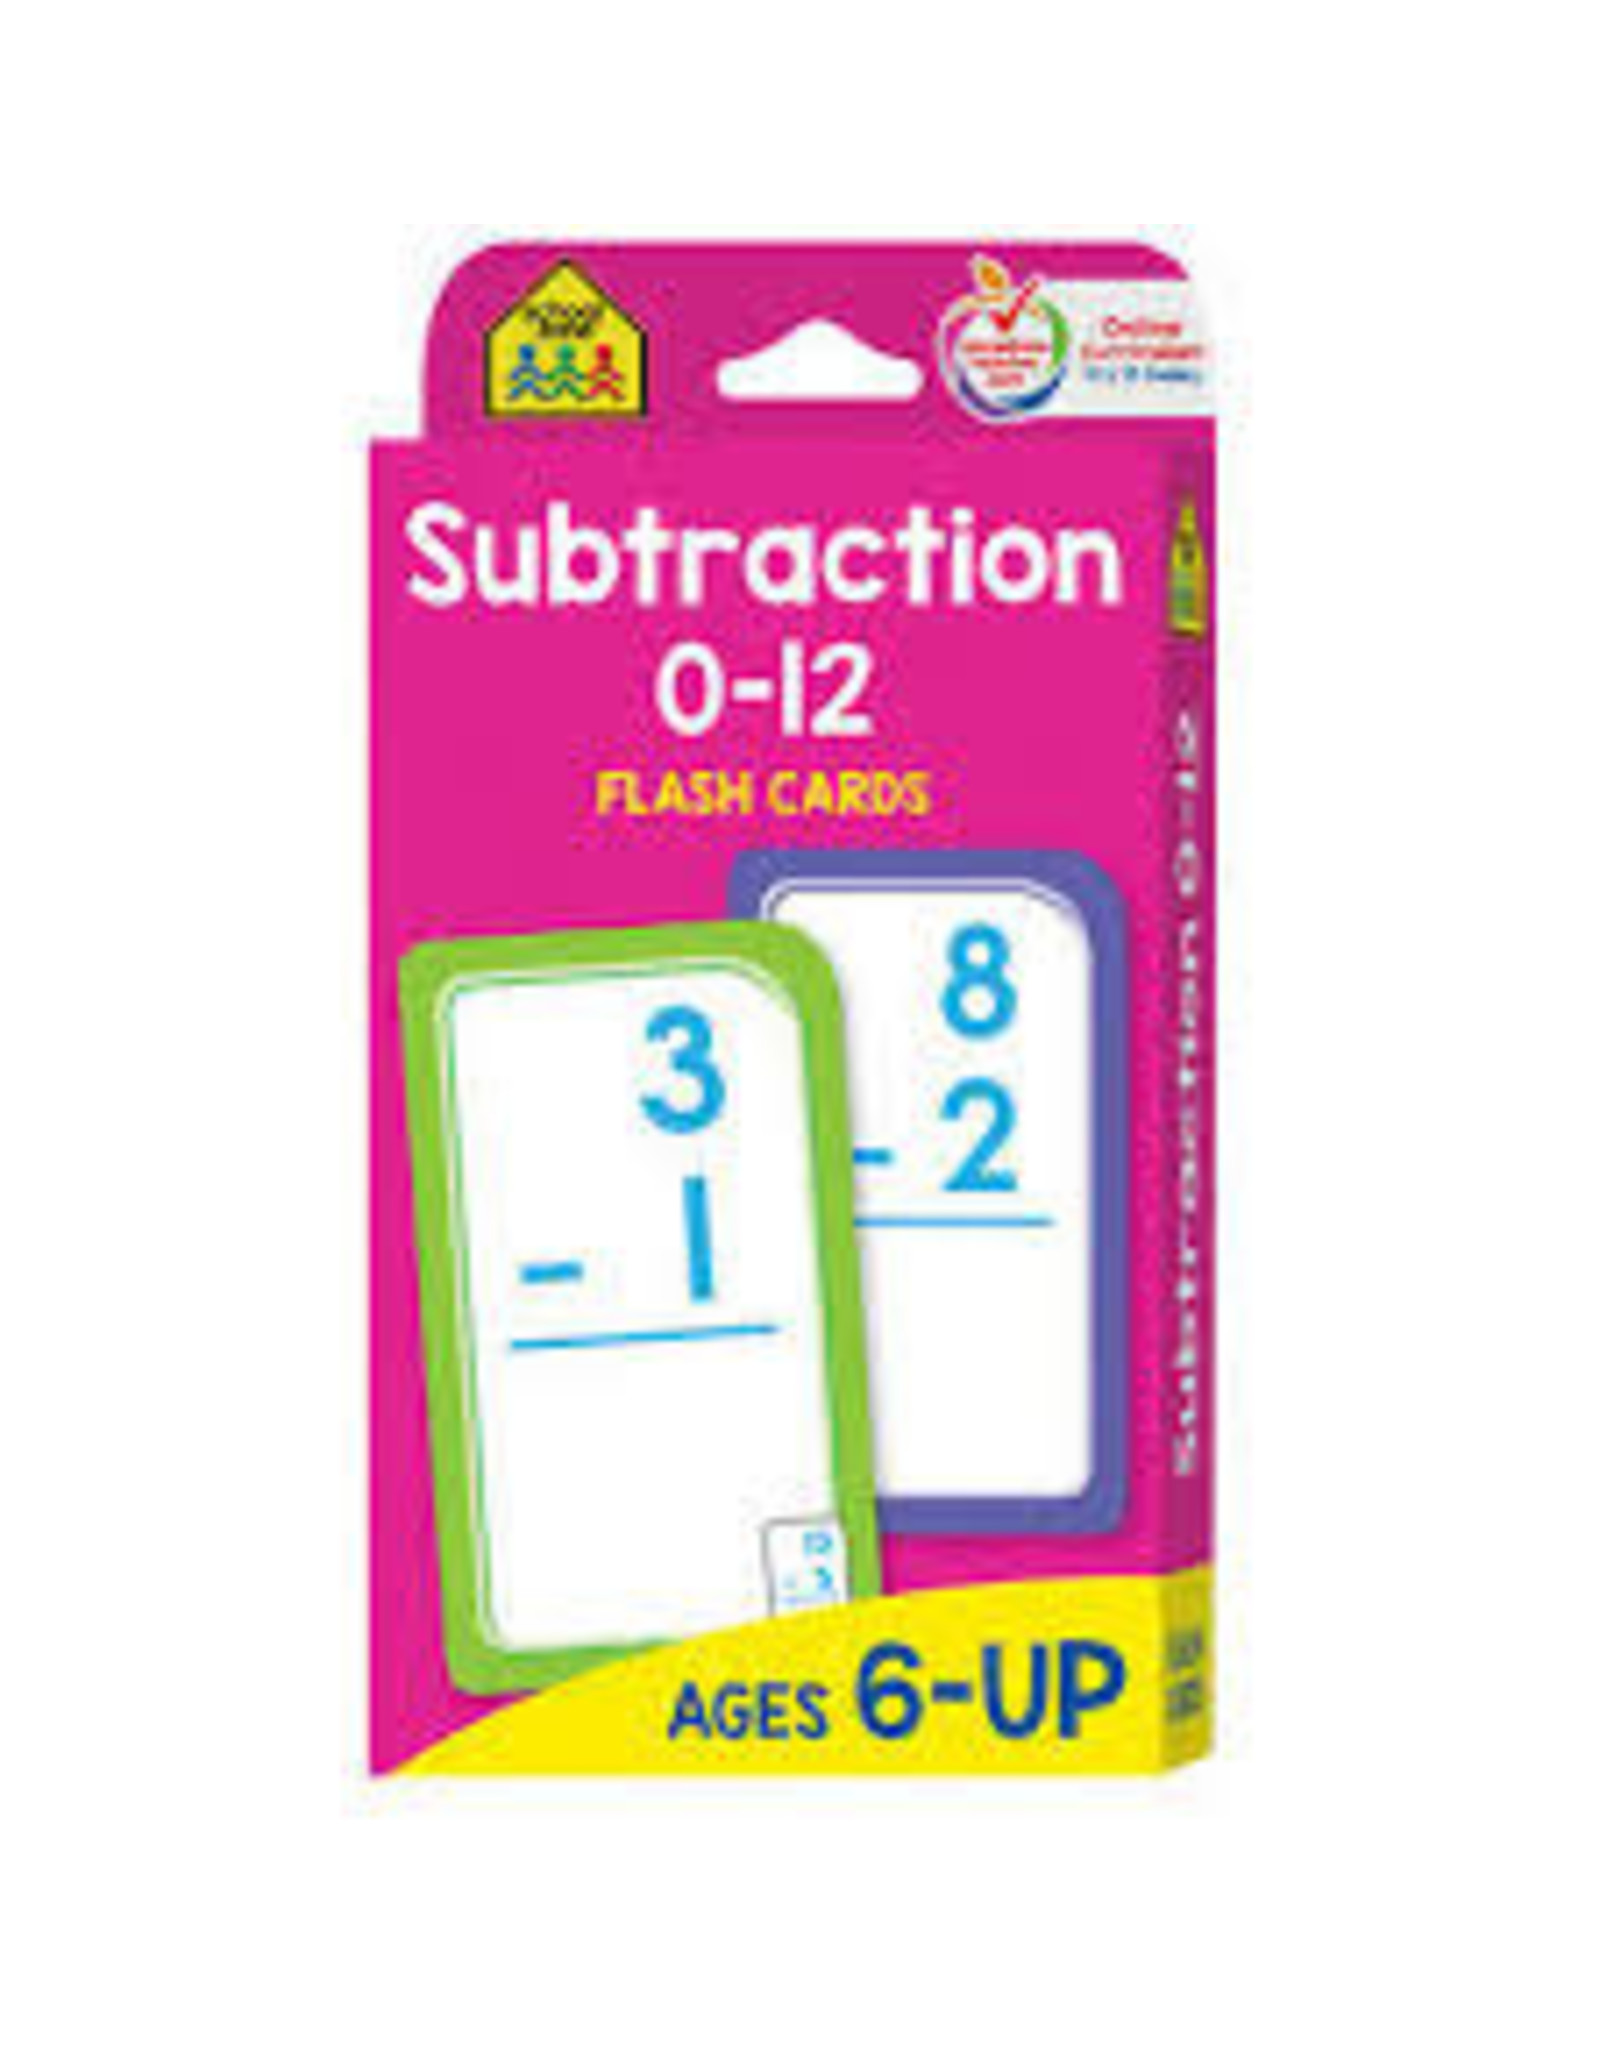 Subtraction 0-12